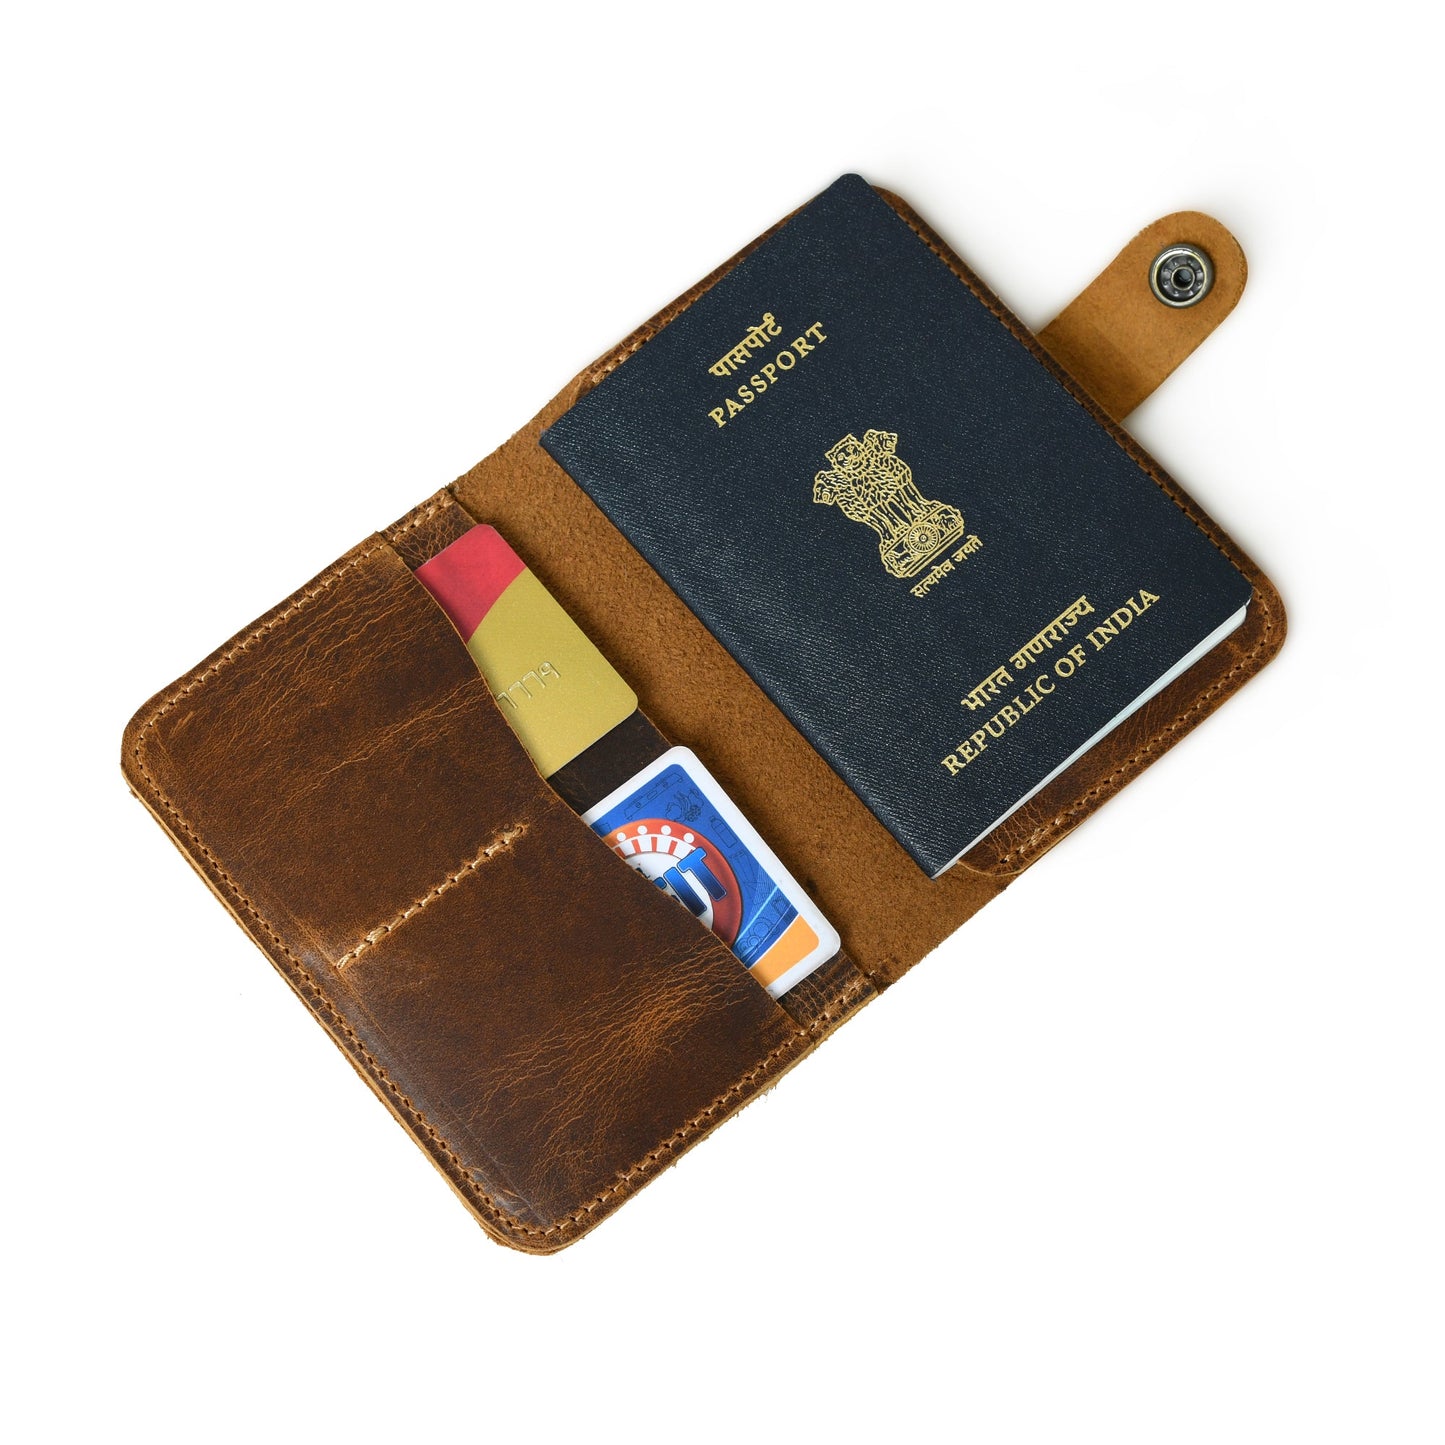 ChicVoyage Passport Sleeve - Brown - The Tool Store